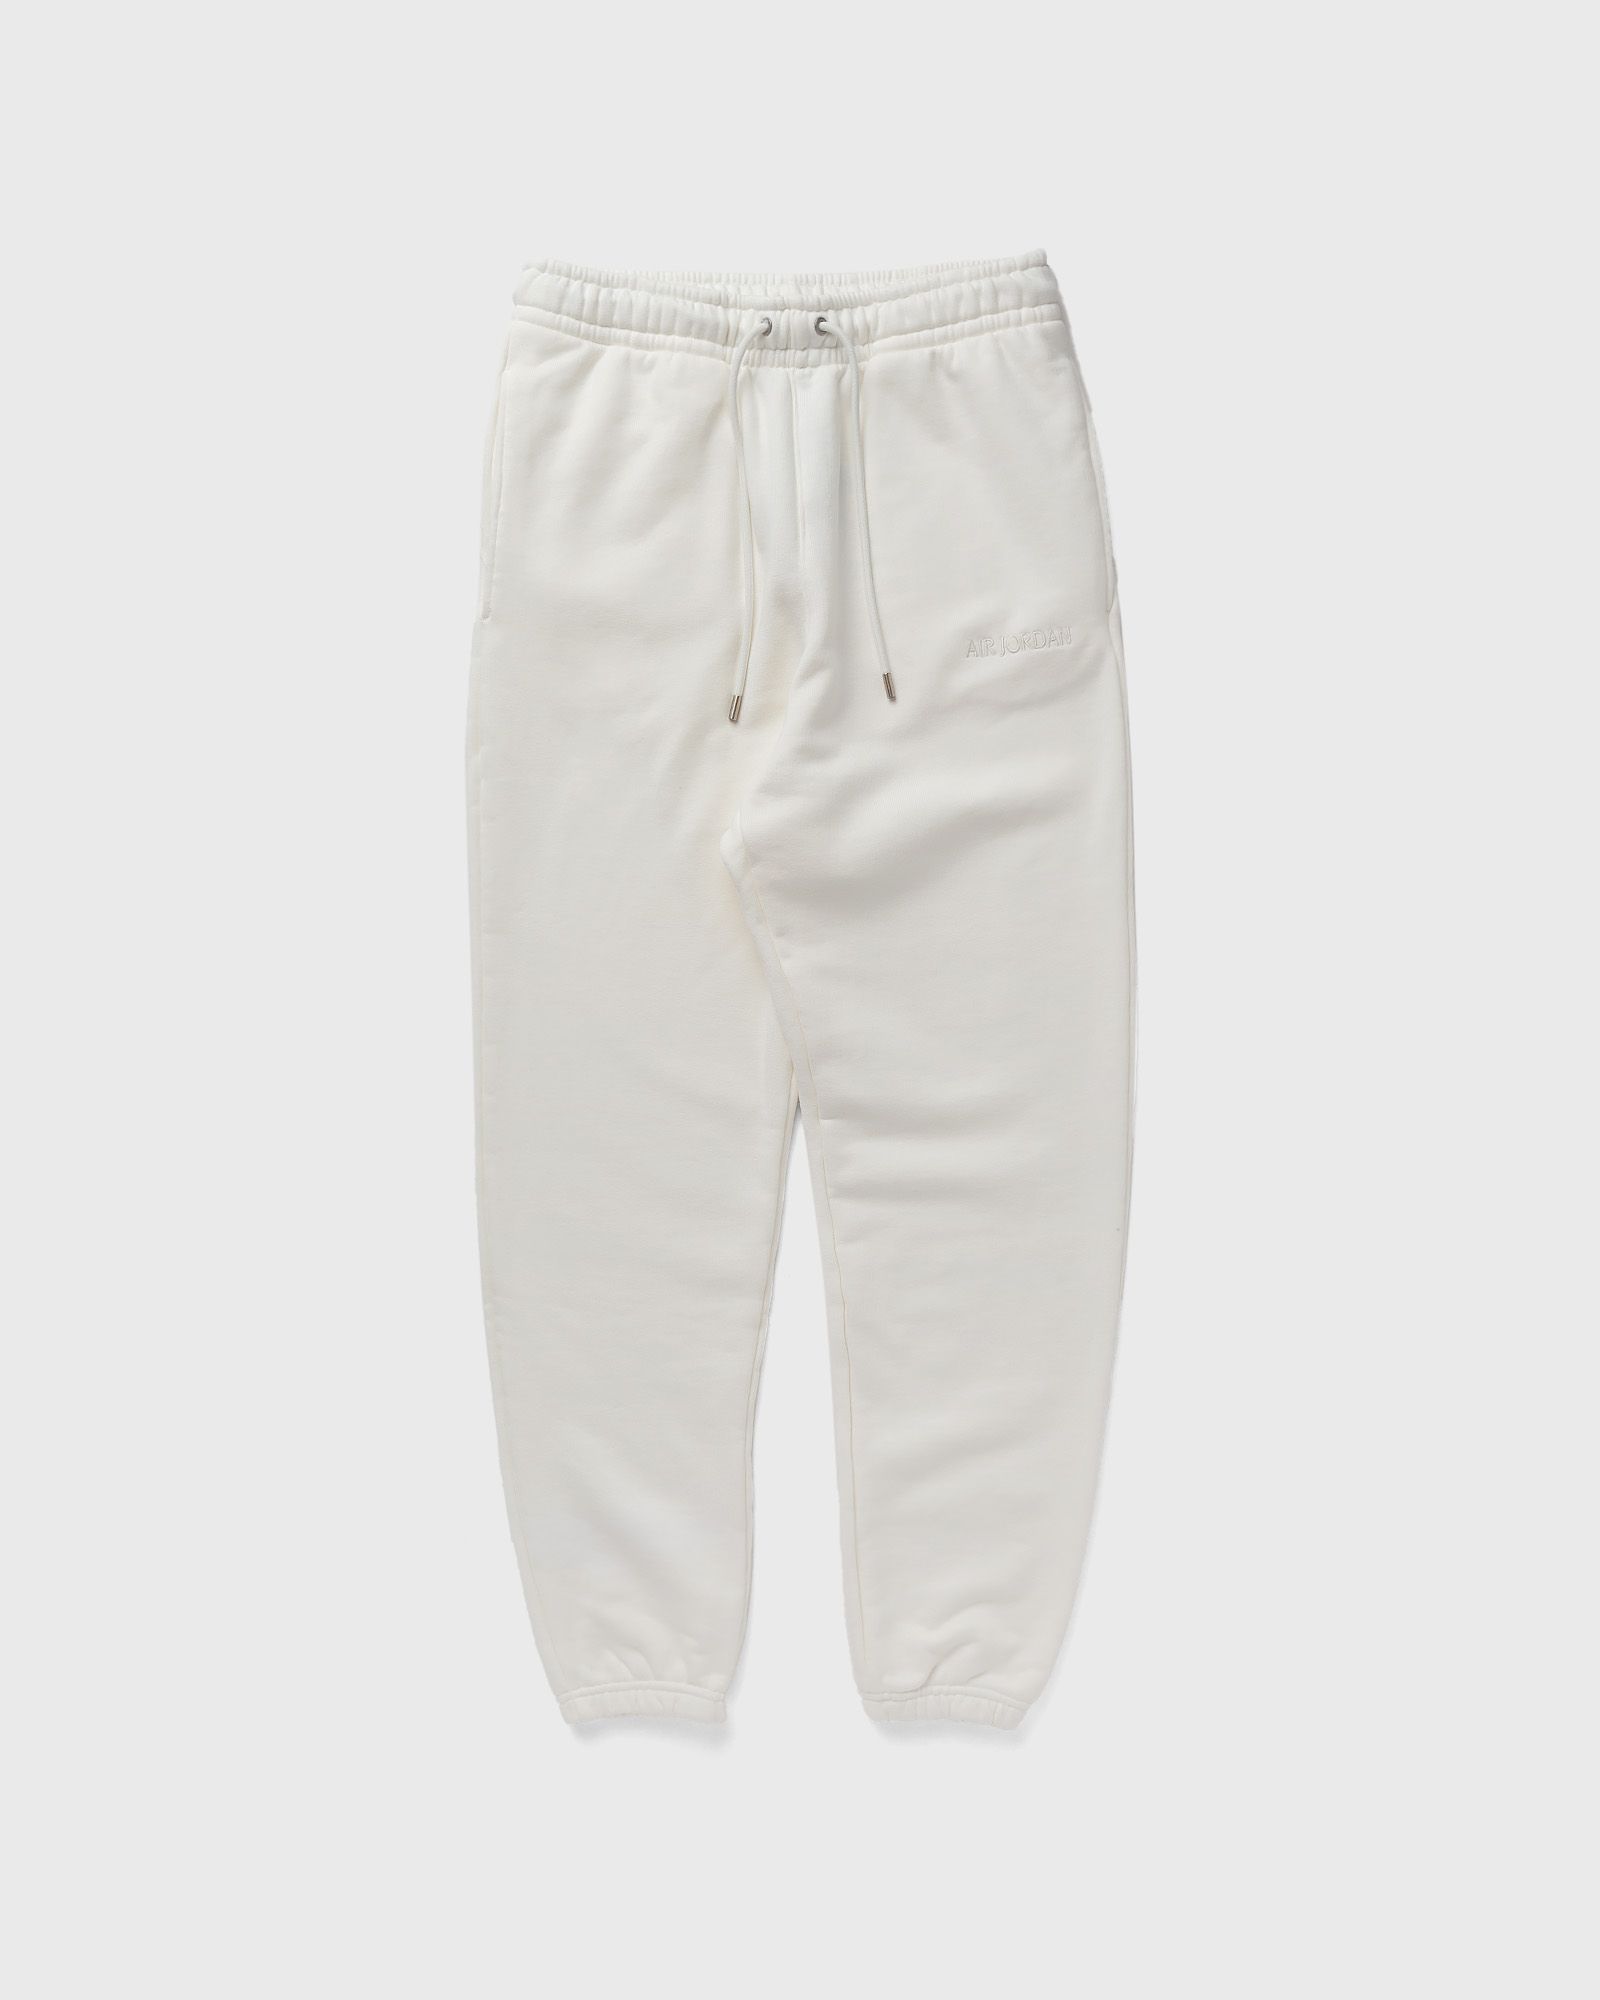 Jordan - wordmark men's fleece pants men sweatpants white in größe:m